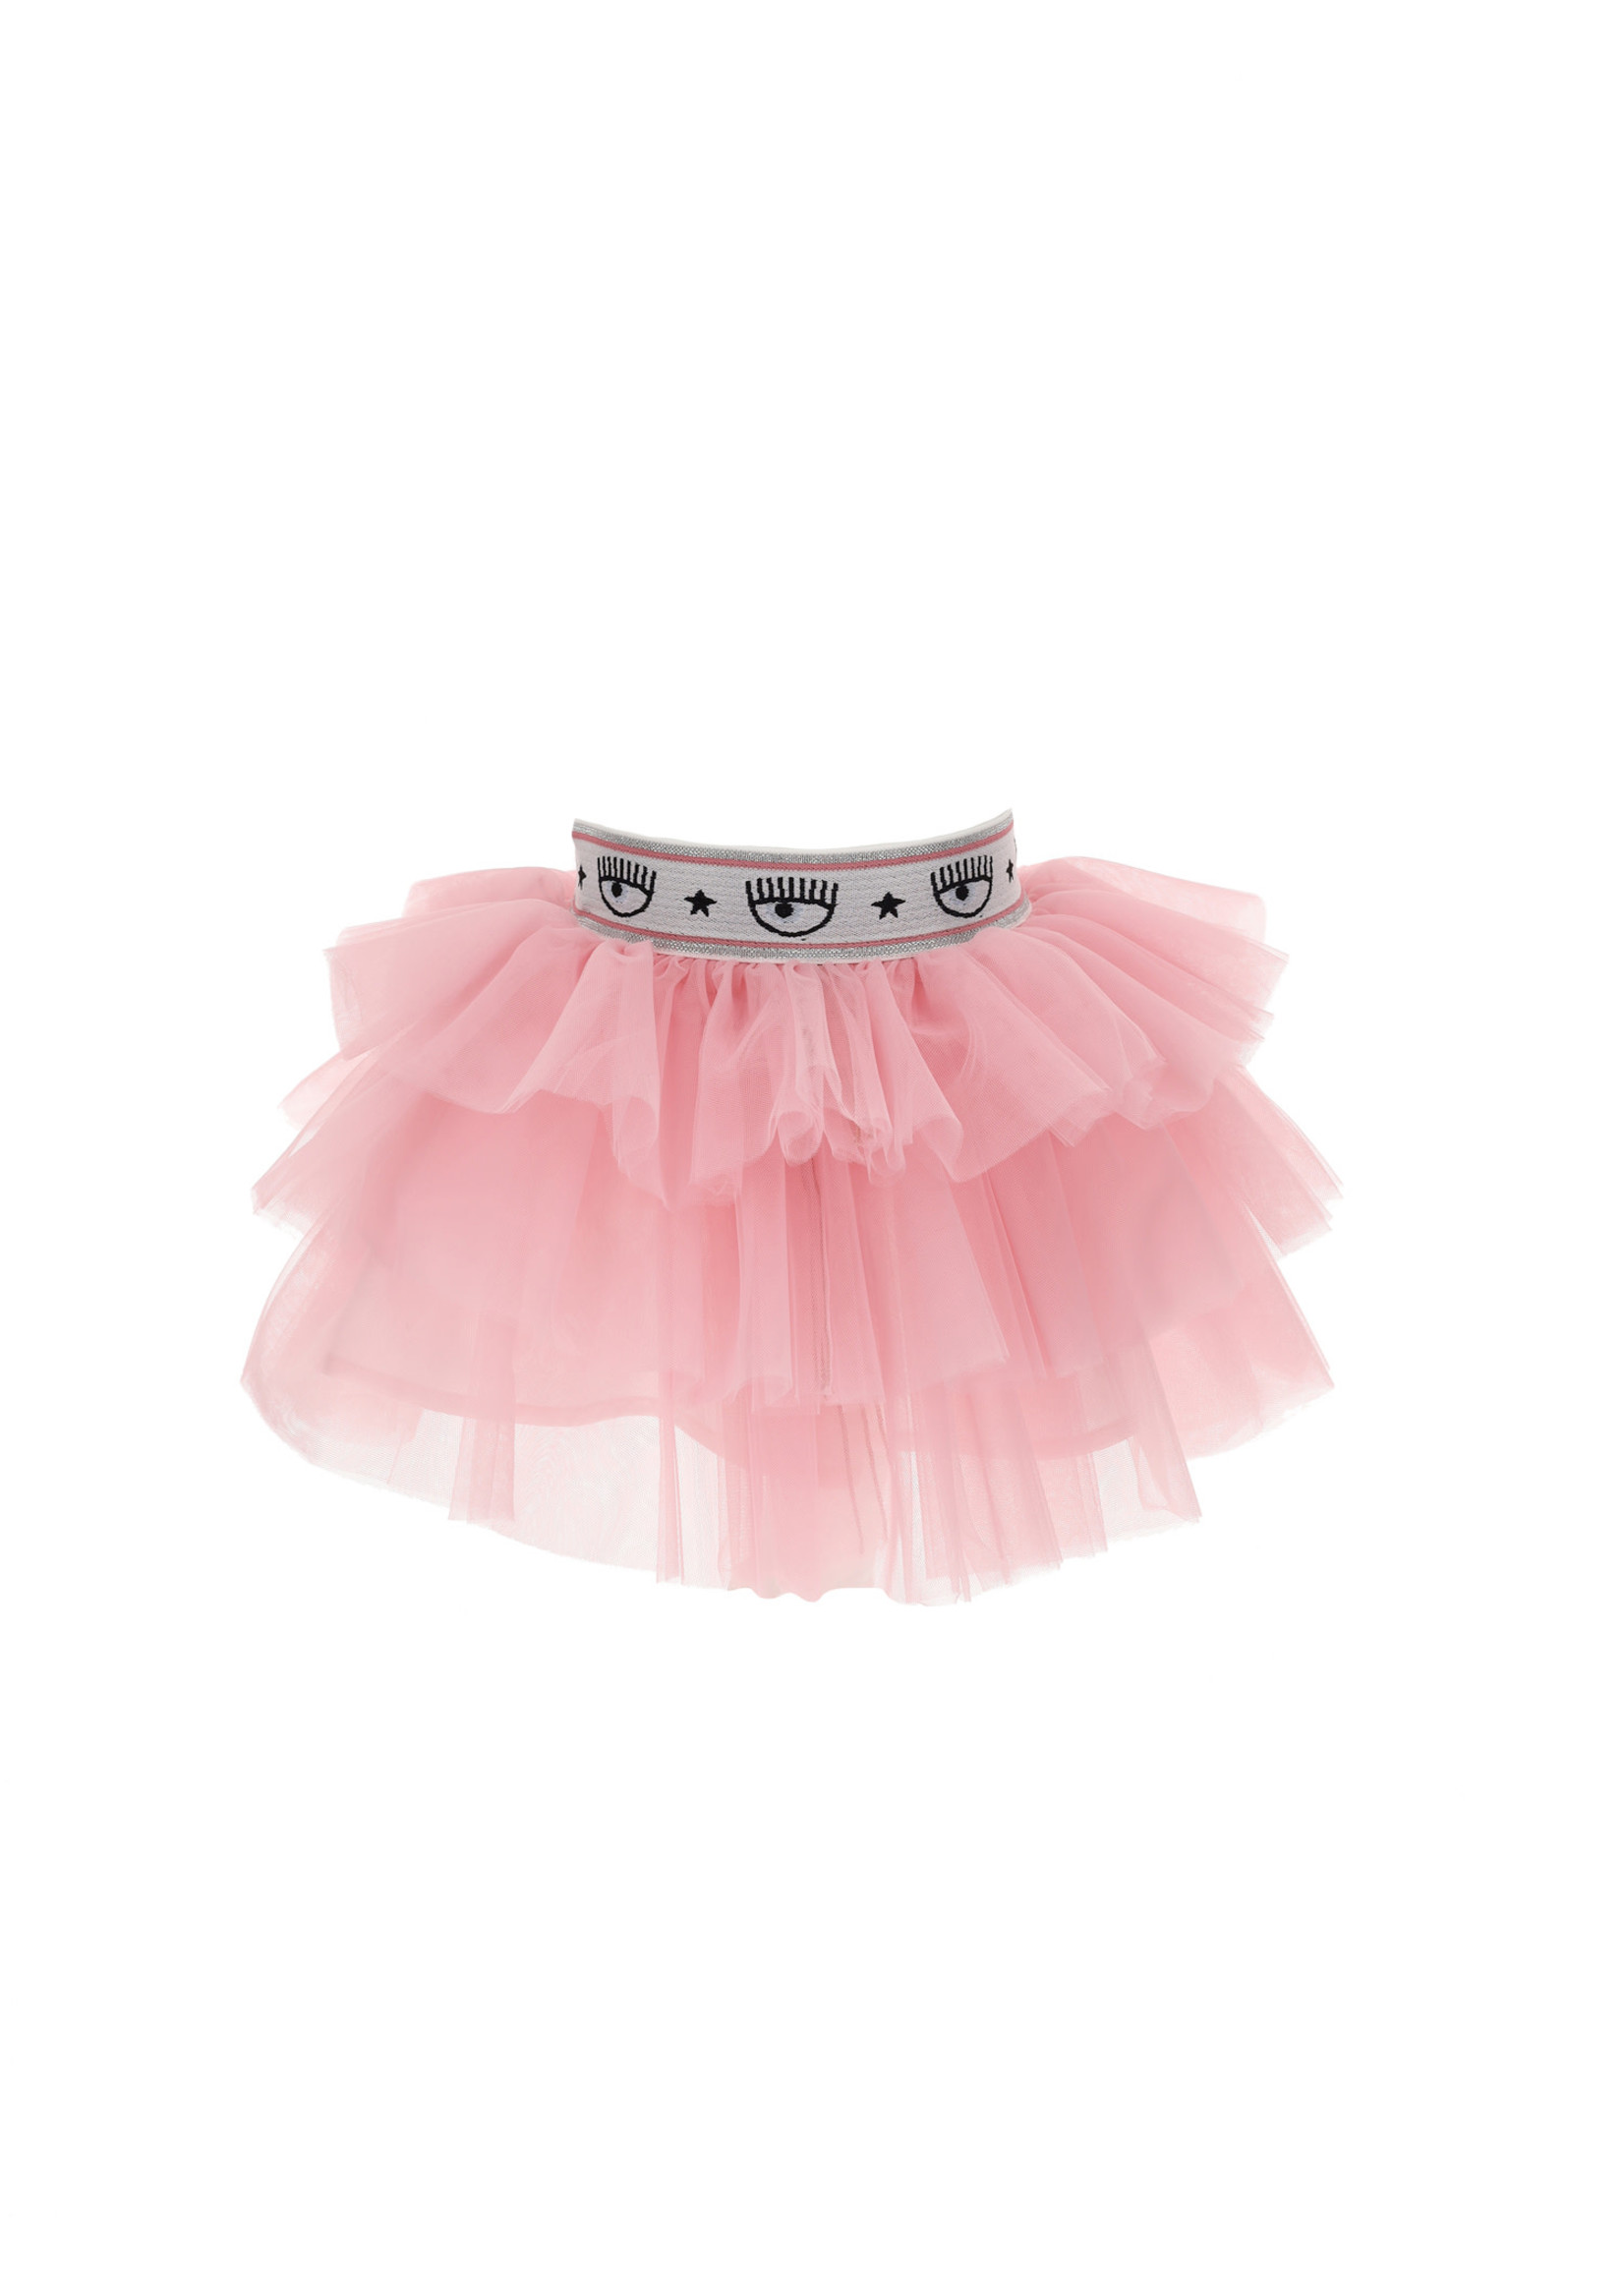 Chiara Ferragni by Monnalisa CF by MONNALISA tutu skirt pink - 538701